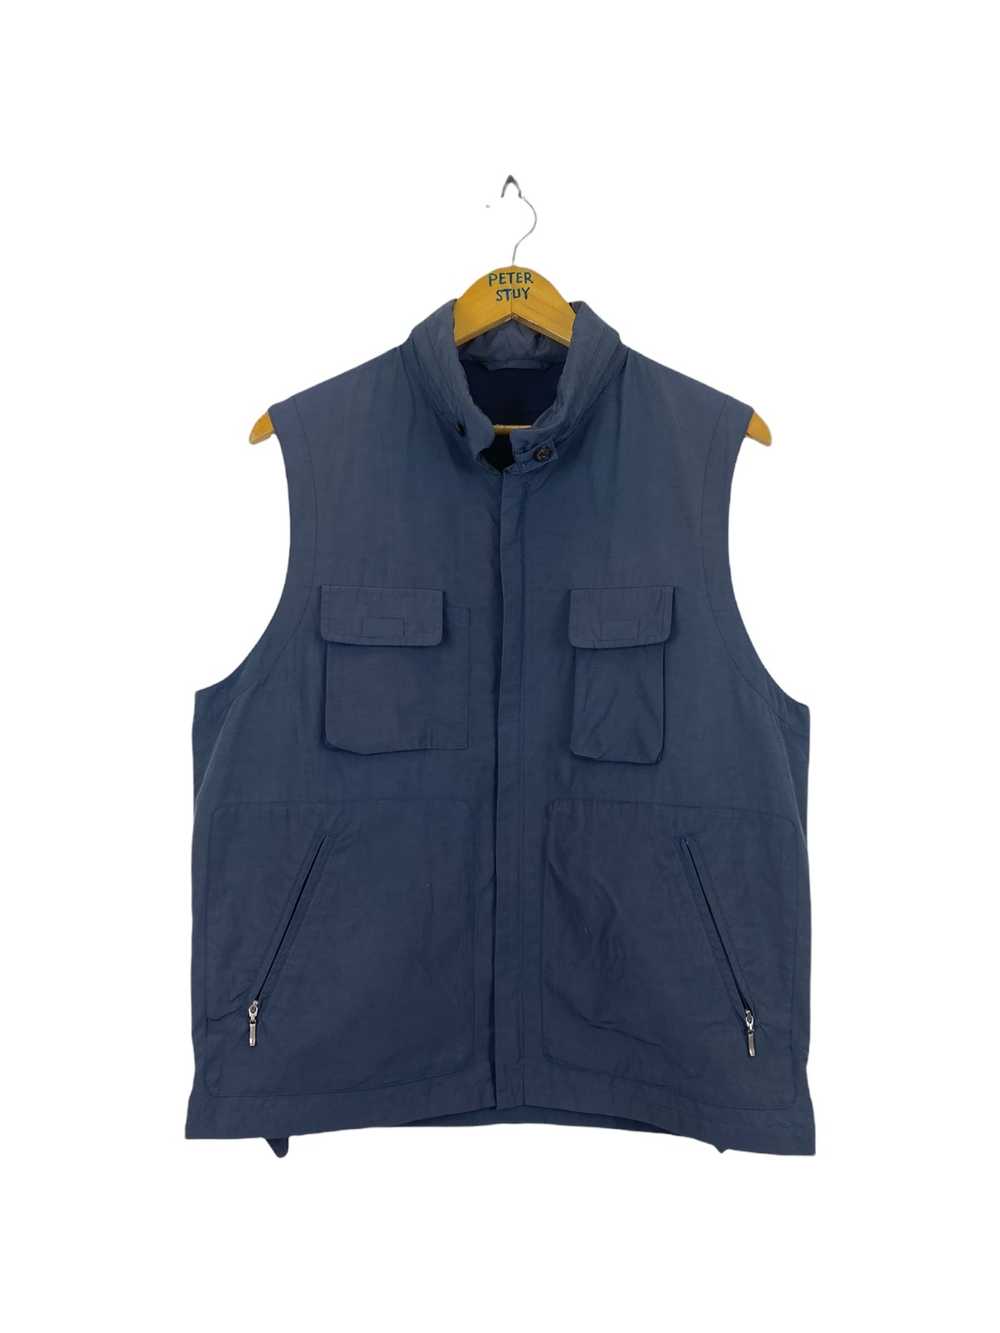 Burberry london nylon vest style - image 1